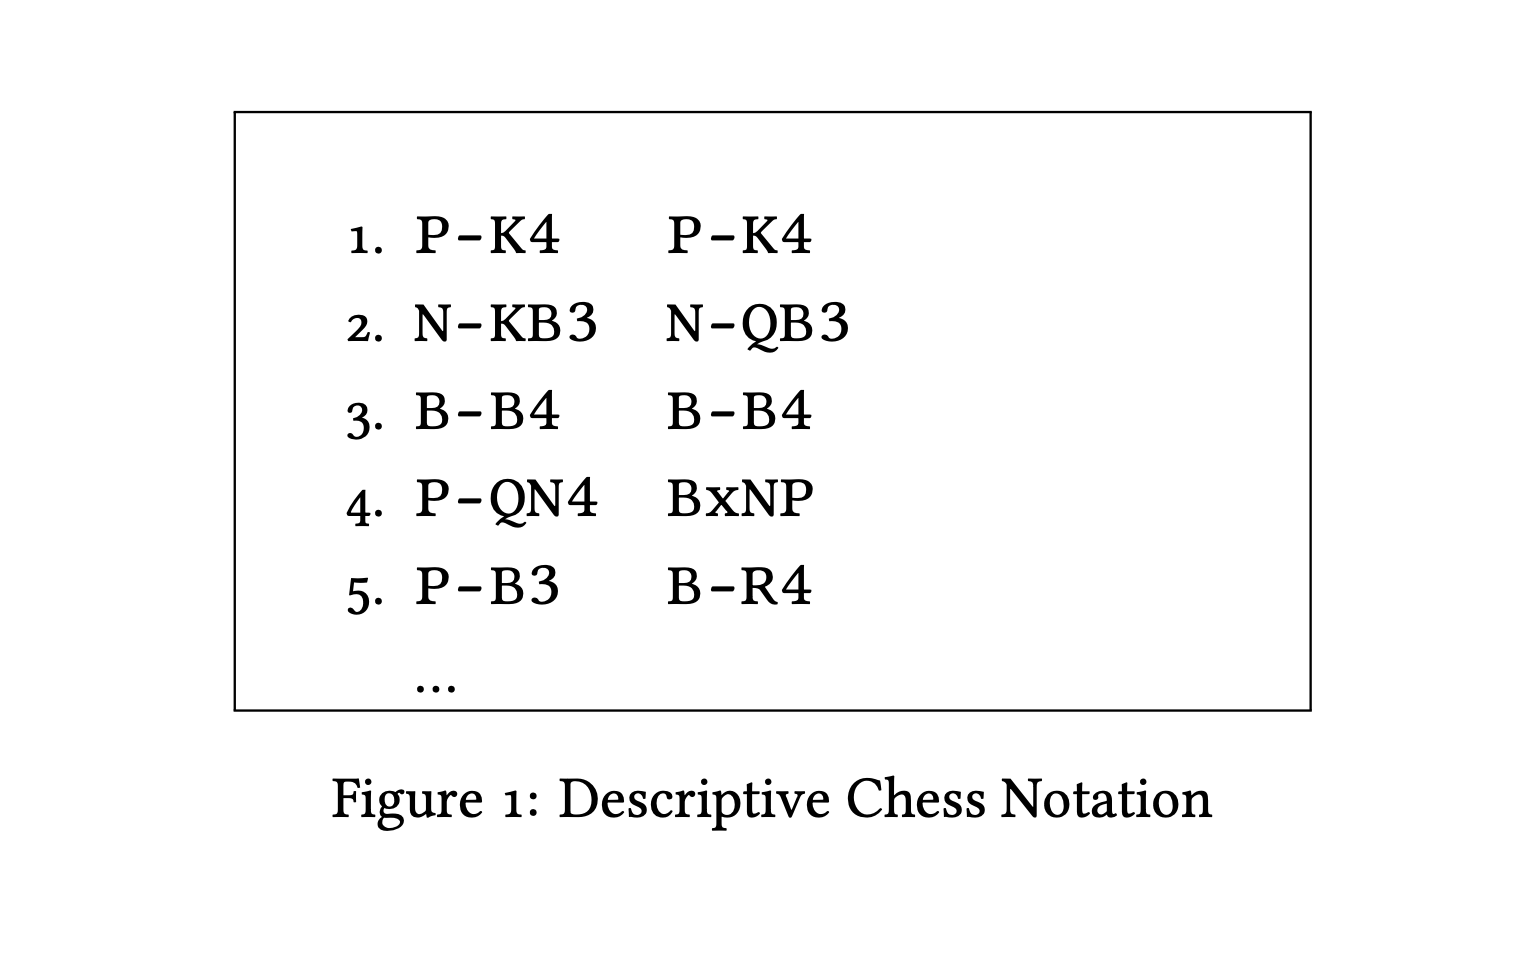 A figure representing descriptive chess notation